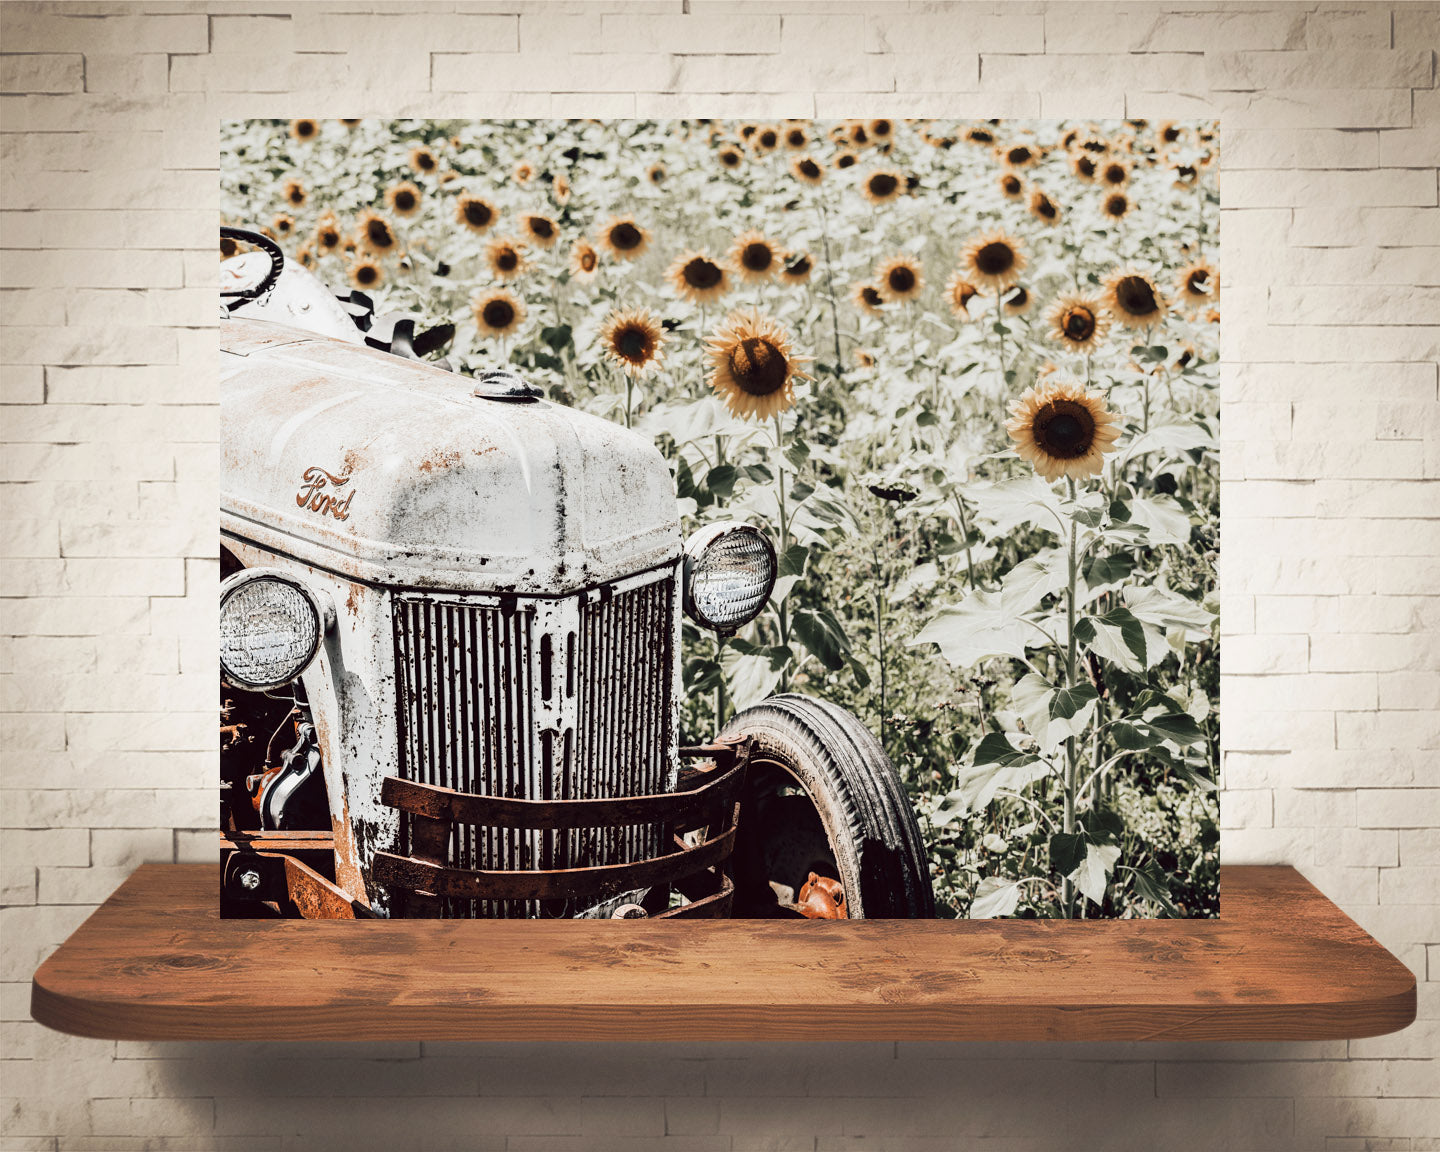 Tractor Sunflower Photograph